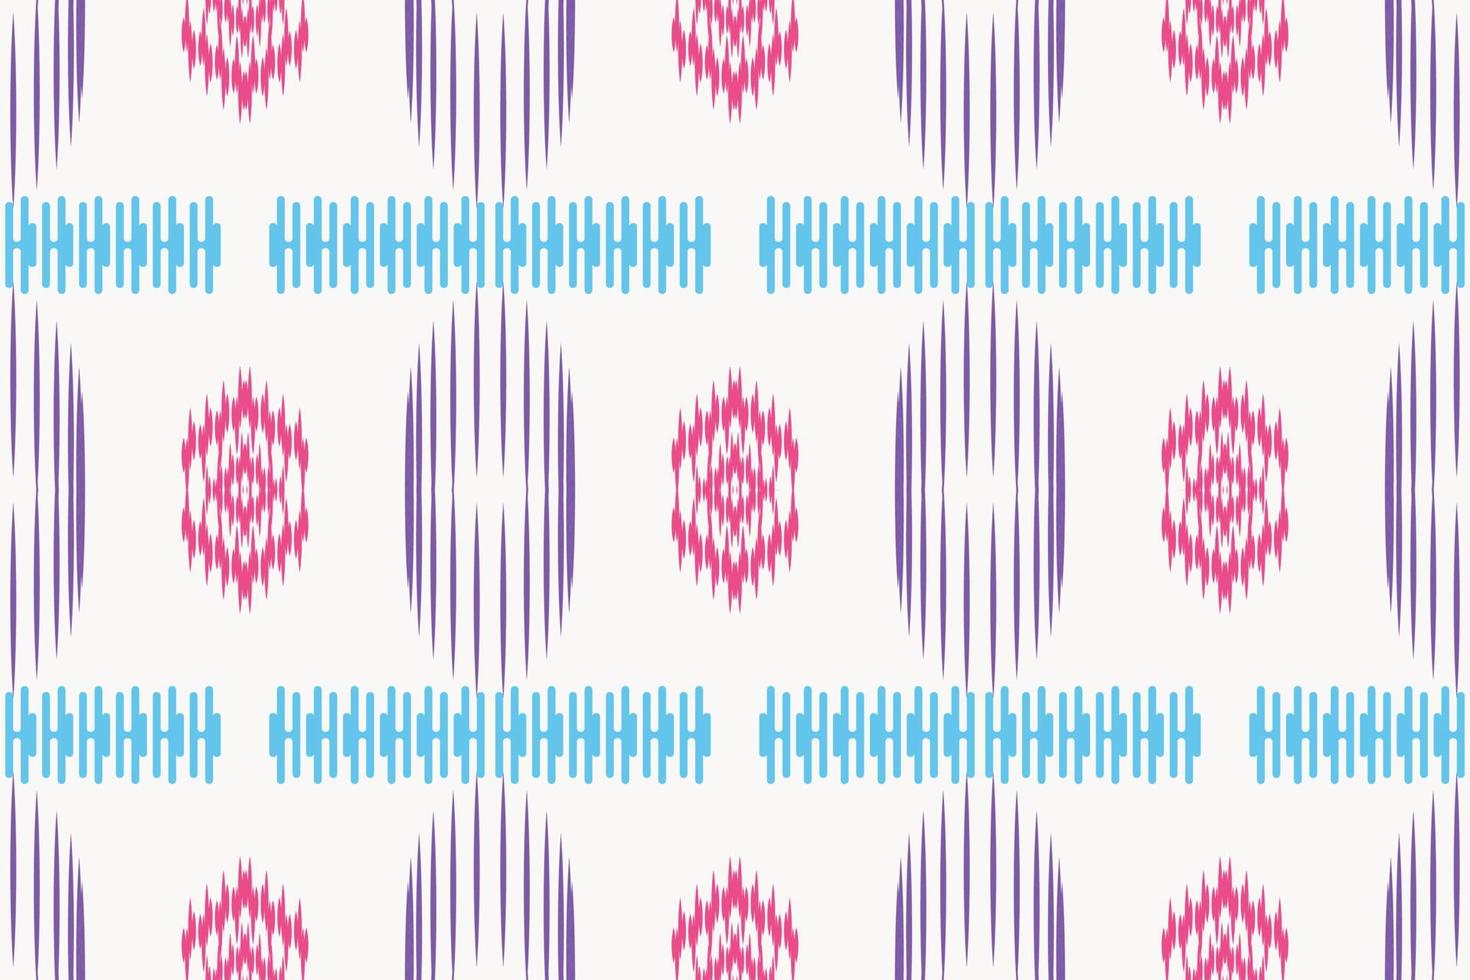 Ikat floral tribal African Seamless Pattern. Ethnic Geometric Ikkat Batik Digital vector textile Design for Prints Fabric saree Mughal brush symbol Swaths texture Kurti Kurtis Kurtas